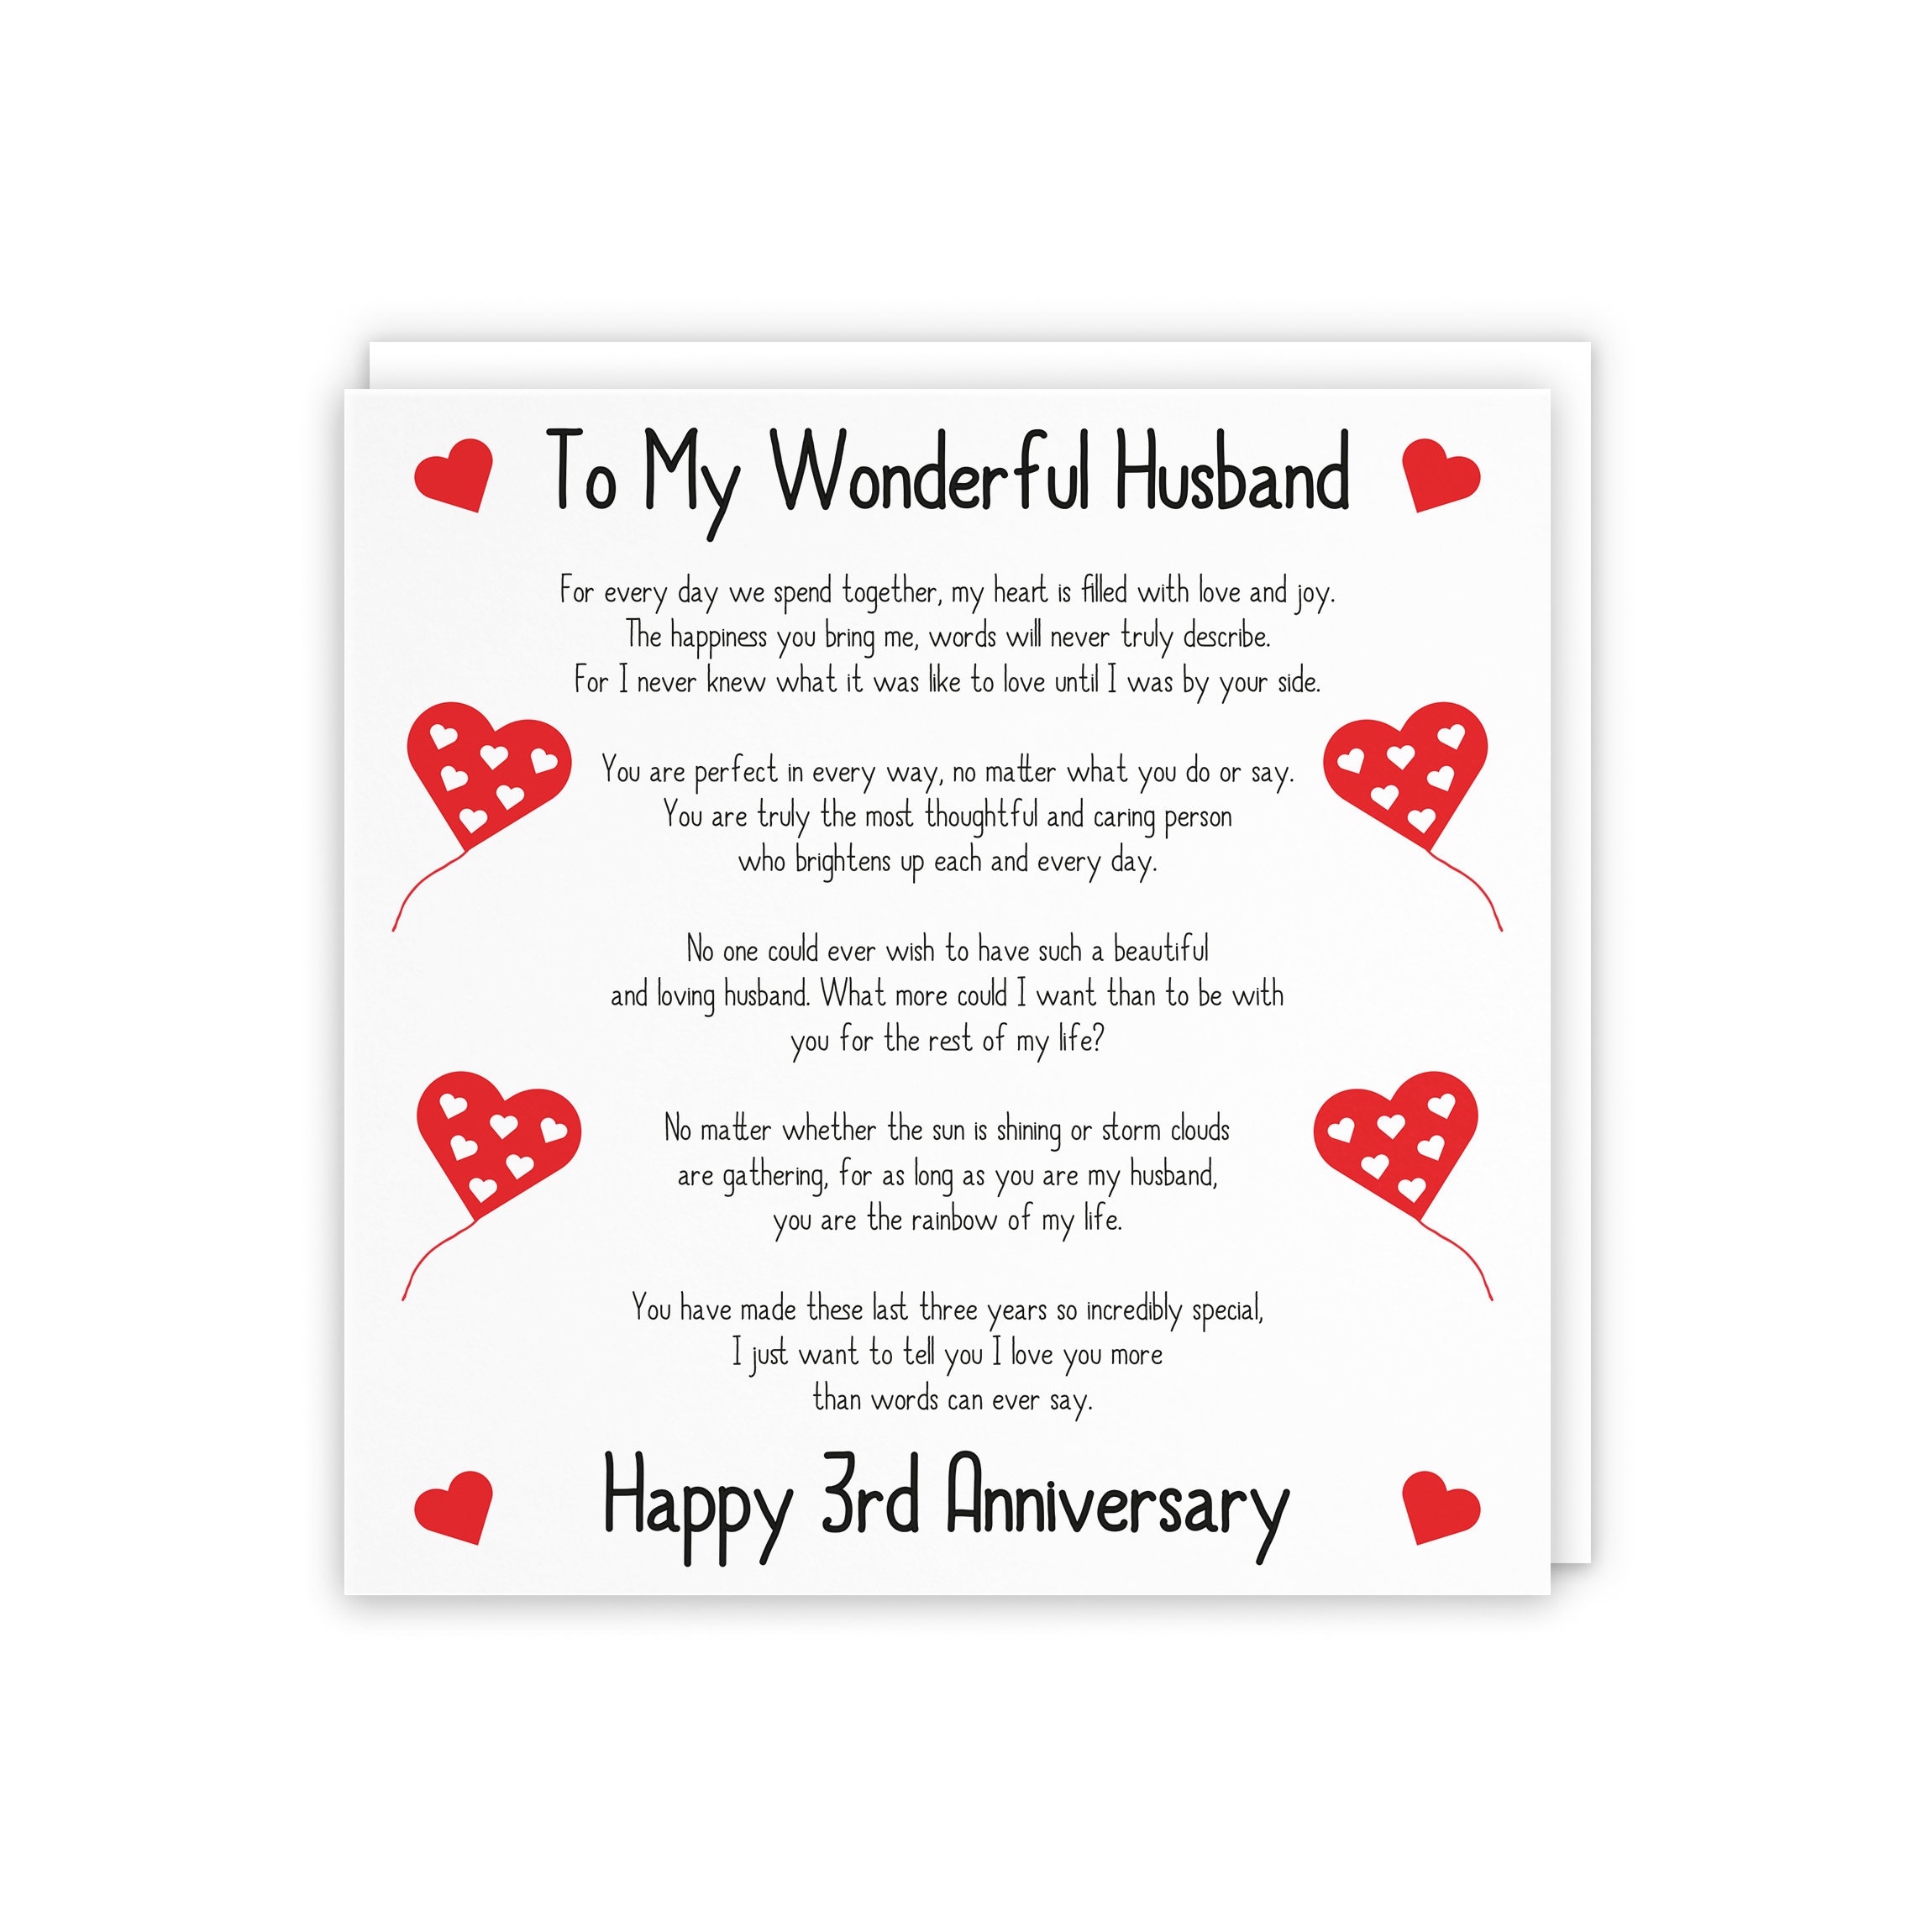 Romantic Husband 3rd Wedding Anniversary Love Verse Card - To My Wonderful  Husband - Happy 3rd Anniversary - Romantic Verses Collection